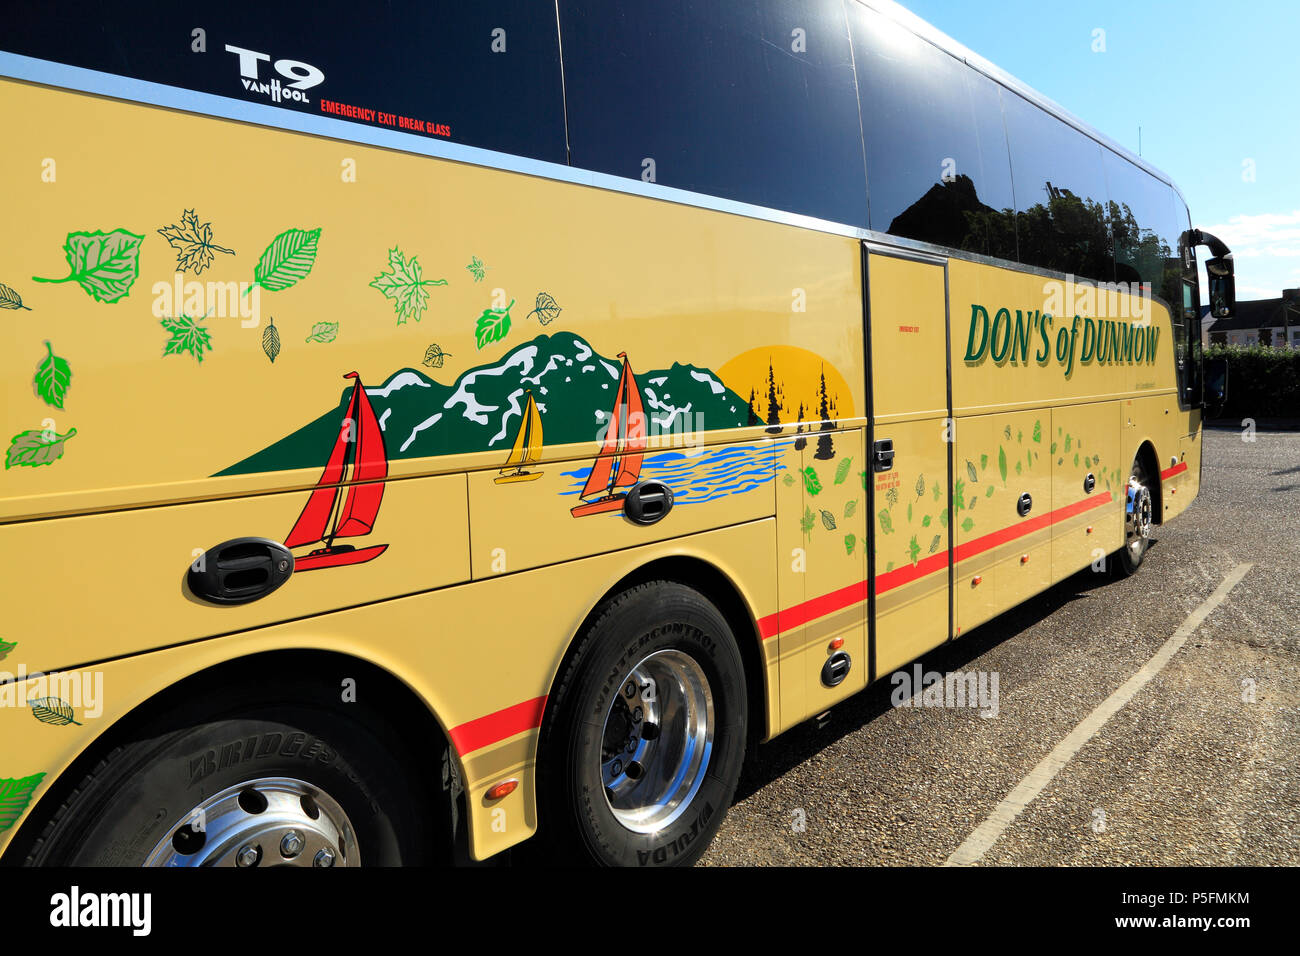 Don's of Dunmow, coach, bus, transport, England, UK Stock Photo